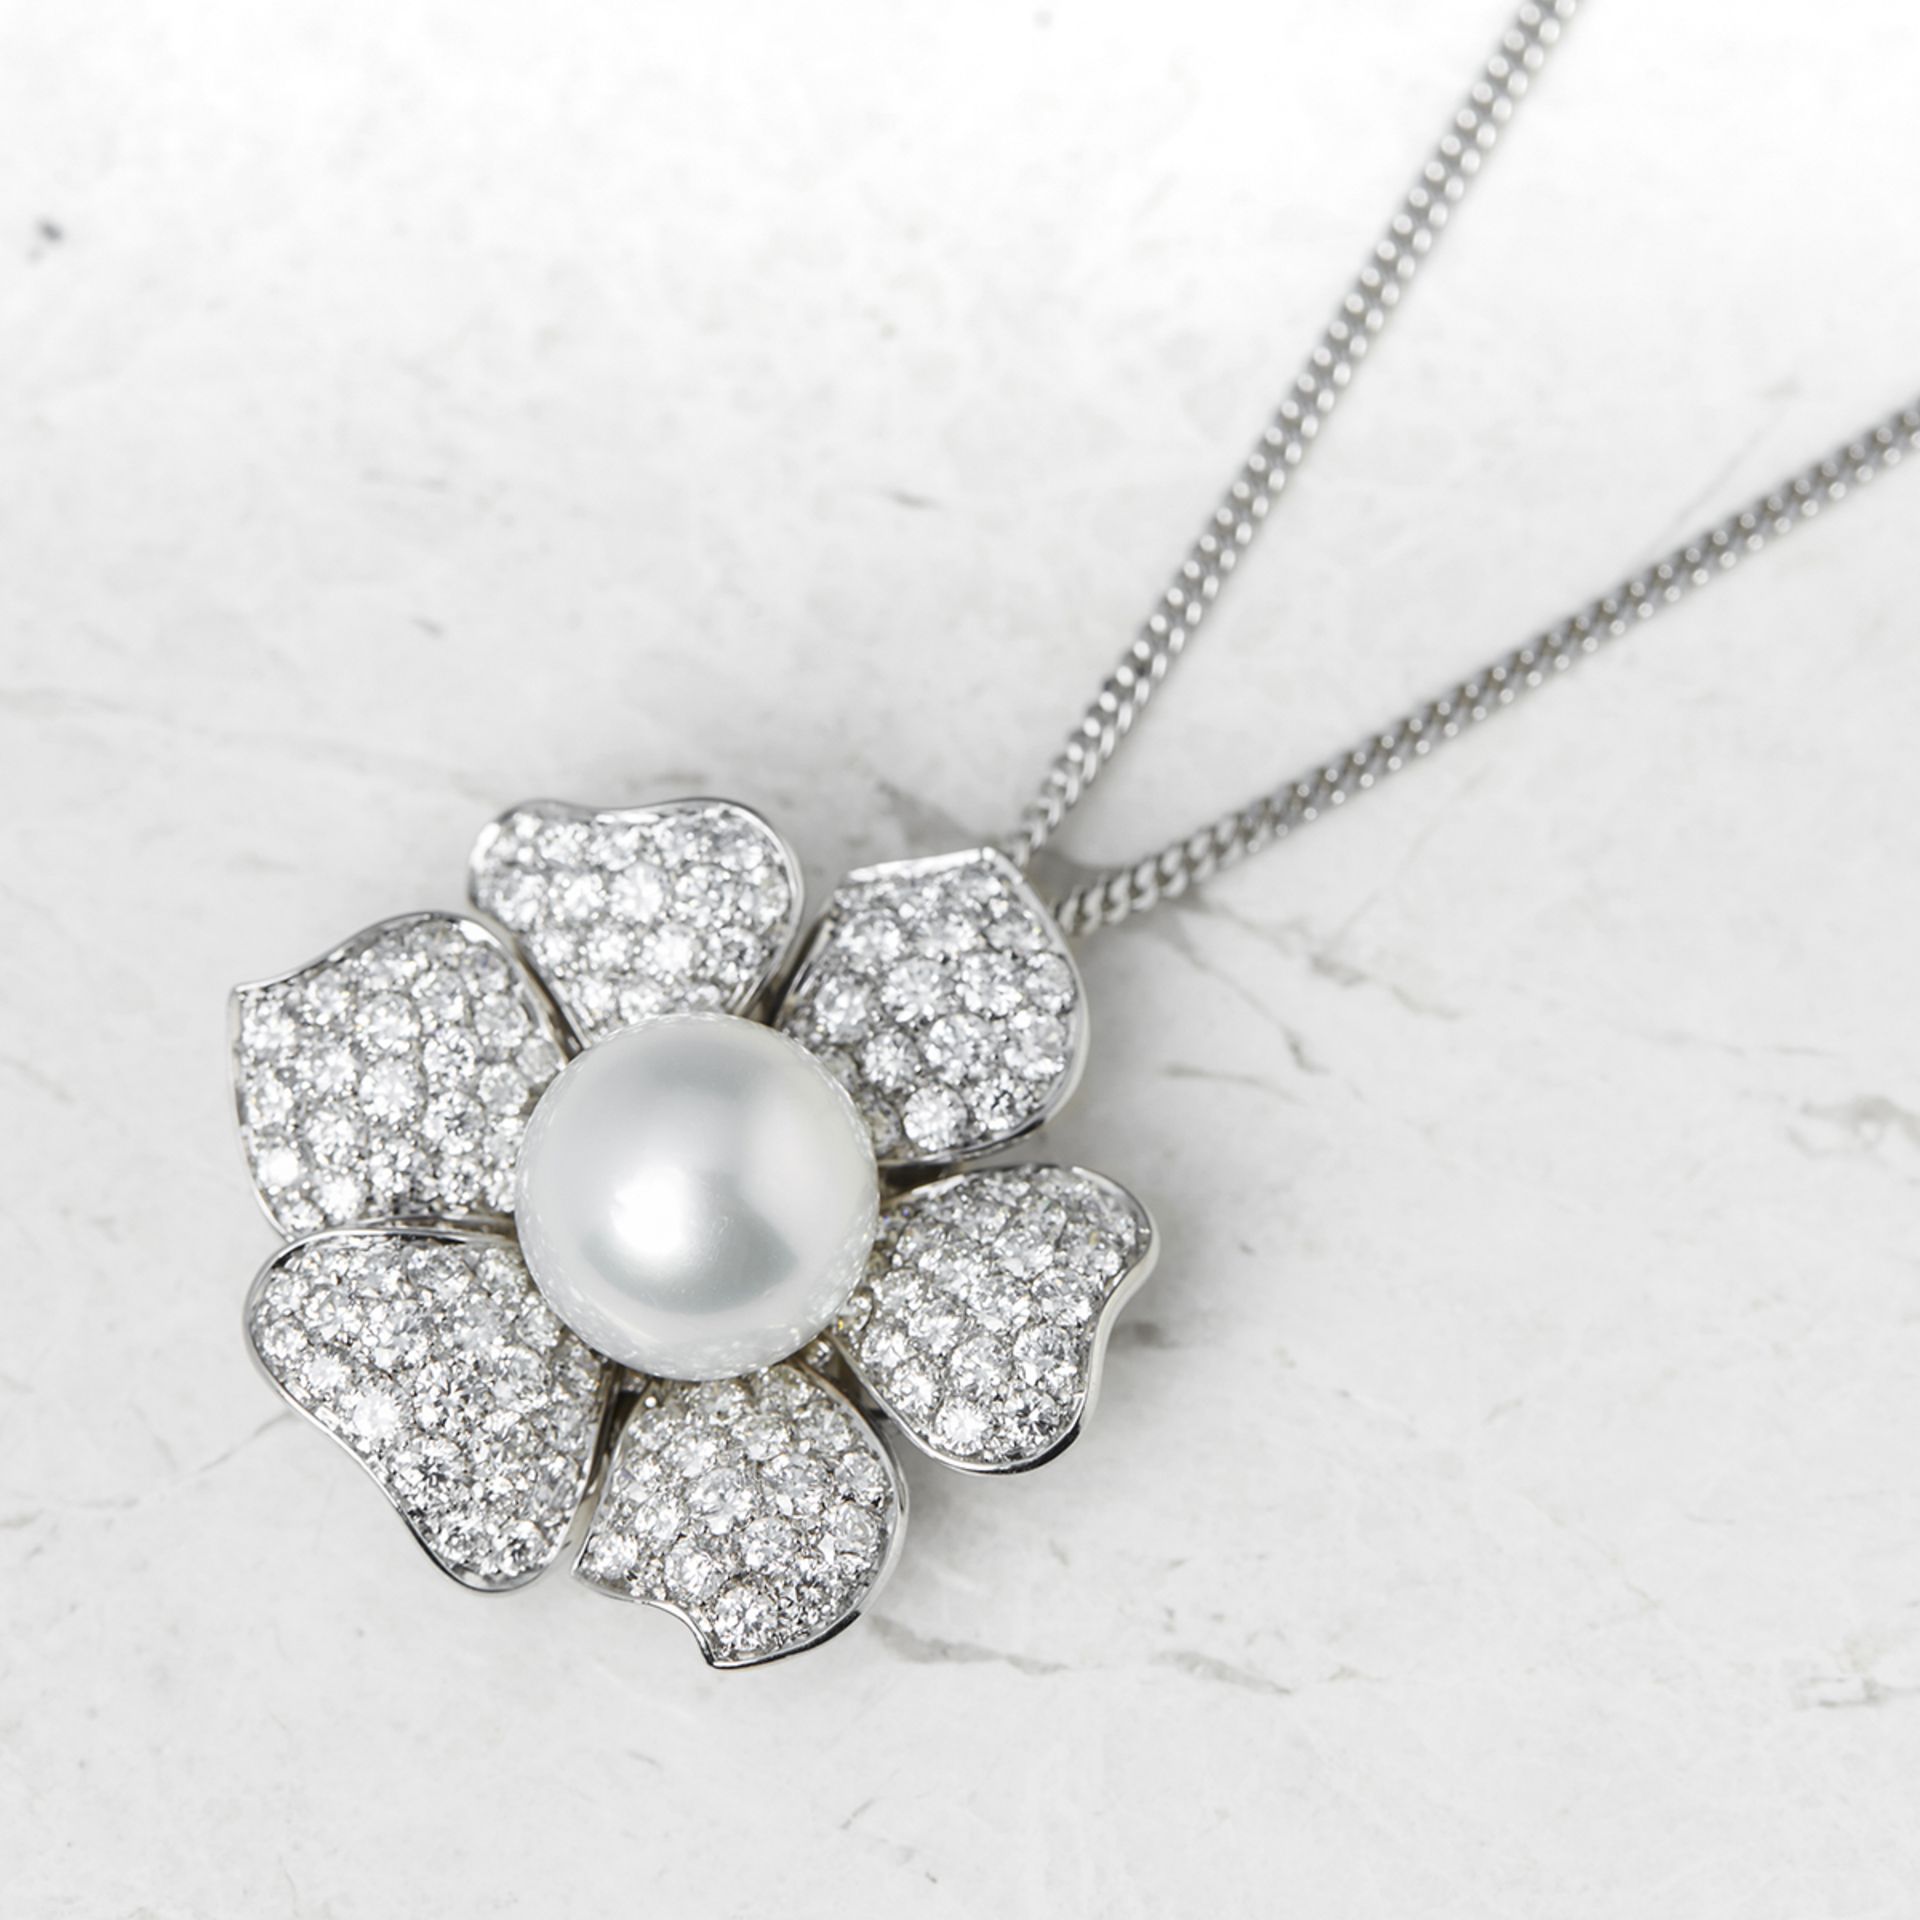 Picchiotti, 18k White Gold South Sea Pearl & 3.60ct Diamond Necklace - Image 2 of 6